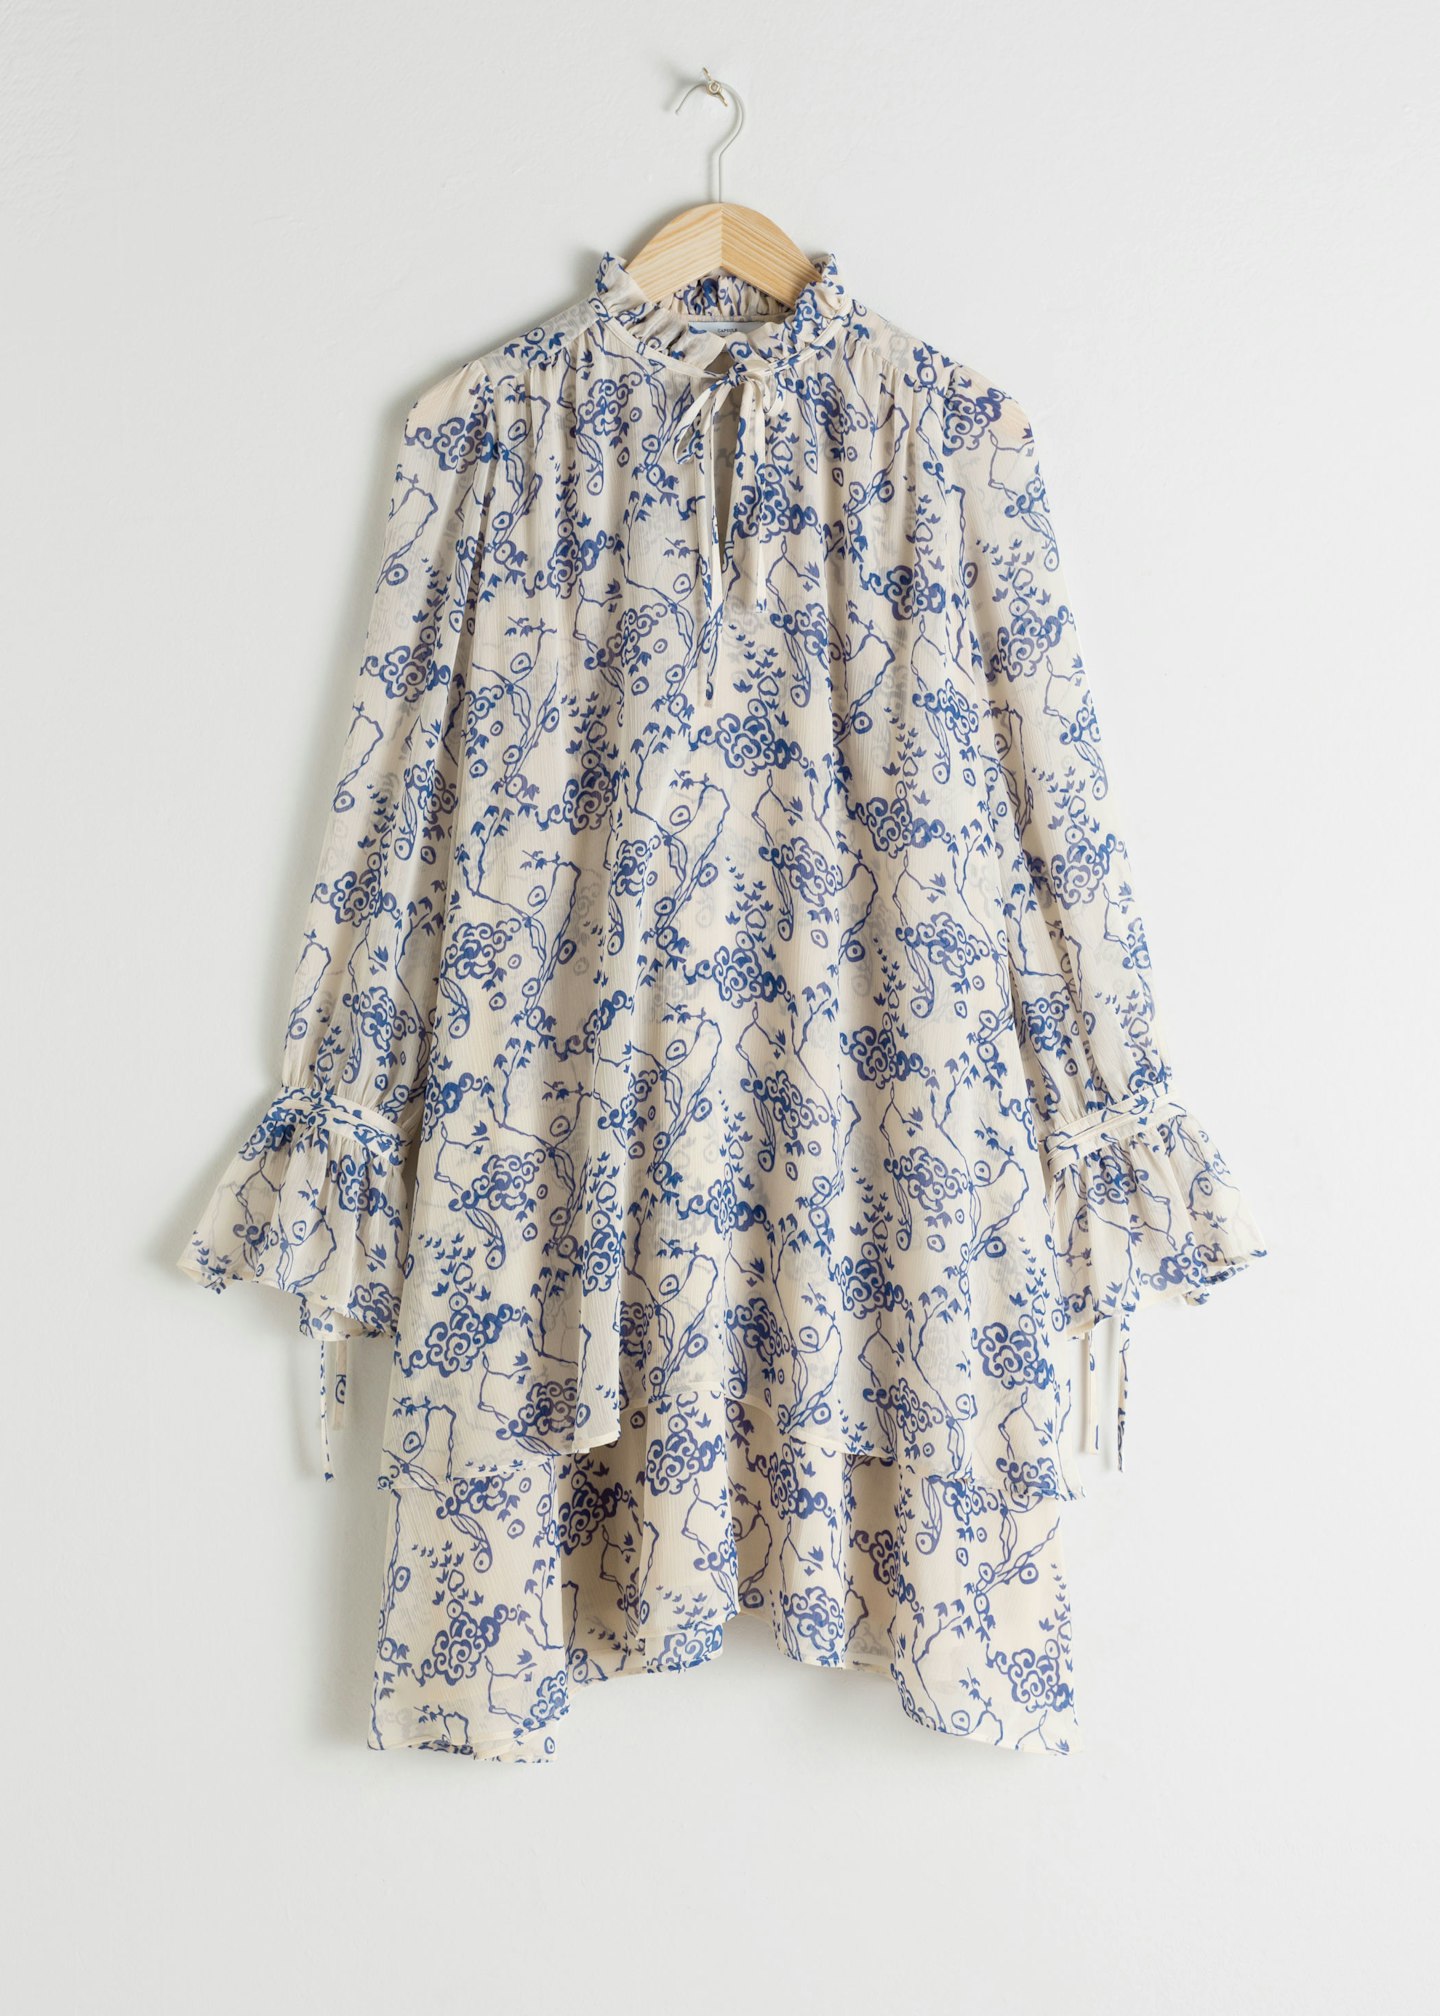 Ruffle Collar Mini Dress, £79